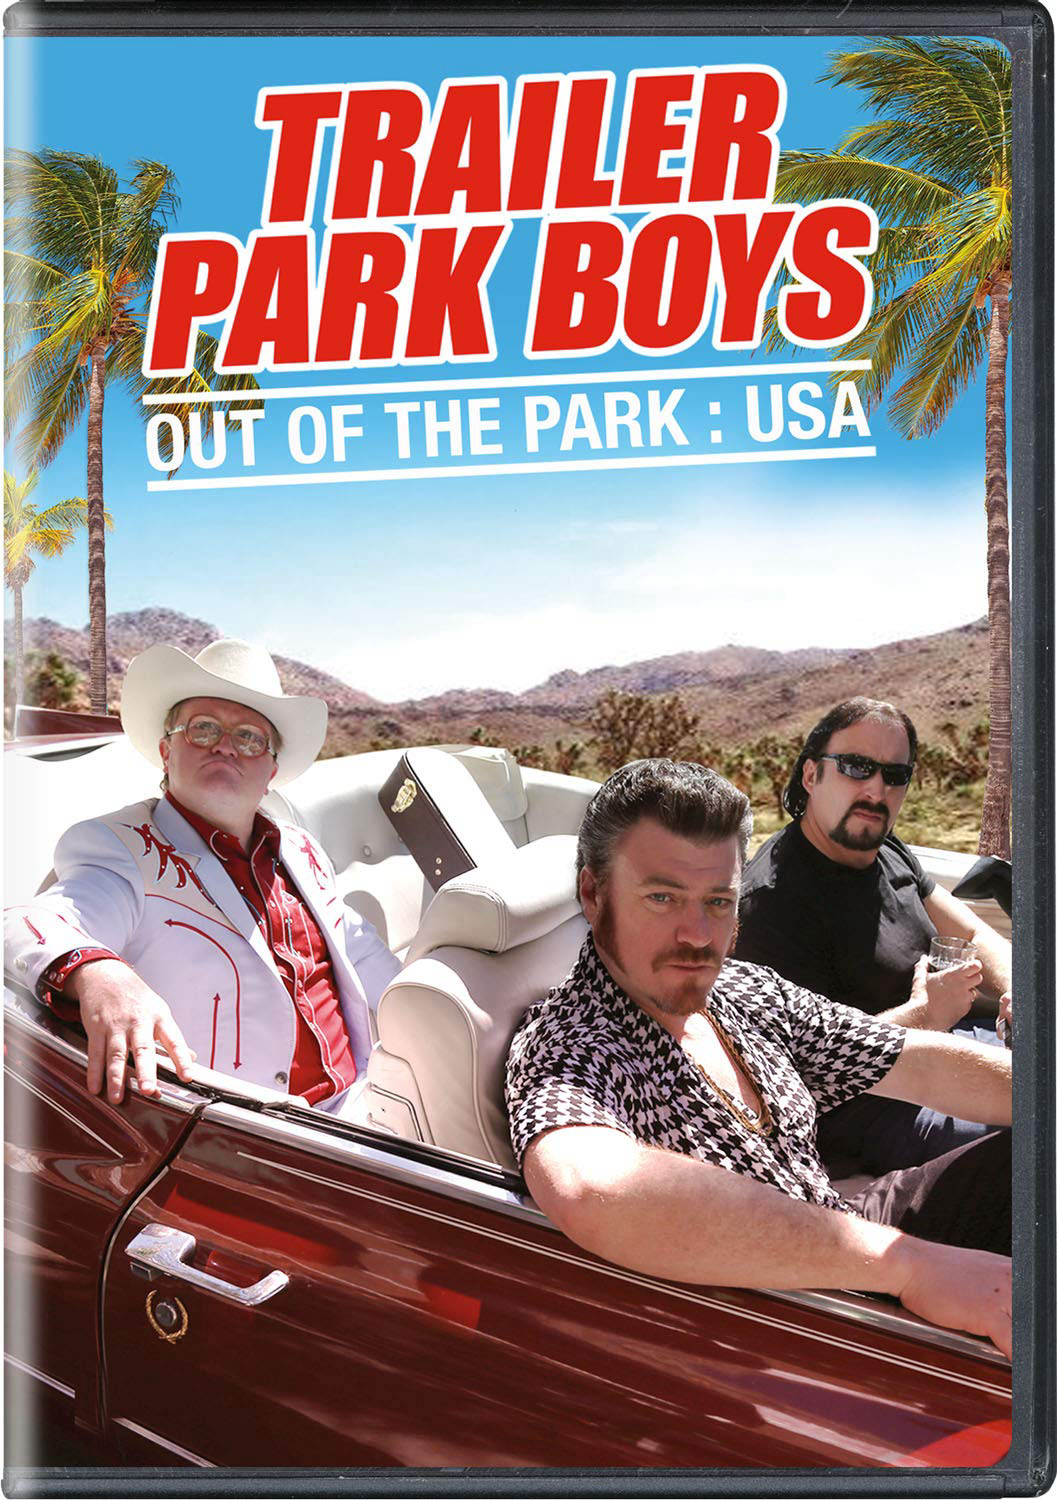 Poster Phim Bộ ba trộm cắp: Nhiệm vụ ở Mỹ (Trailer Park Boys: Out of the Park: USA)